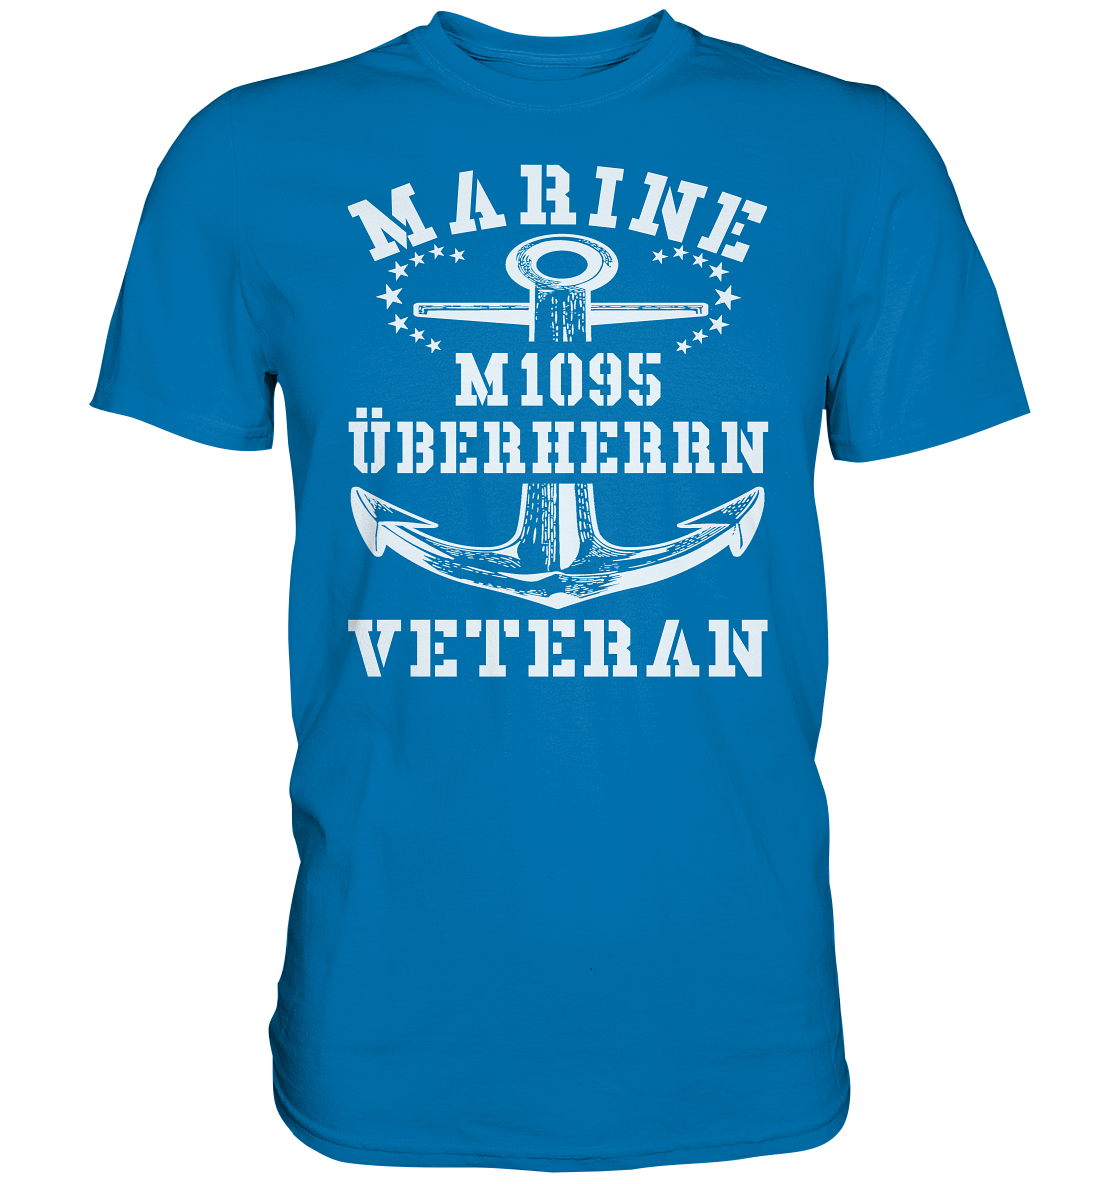 M1095 ÜBERHERRN Marine Veteran - Premium Shirt